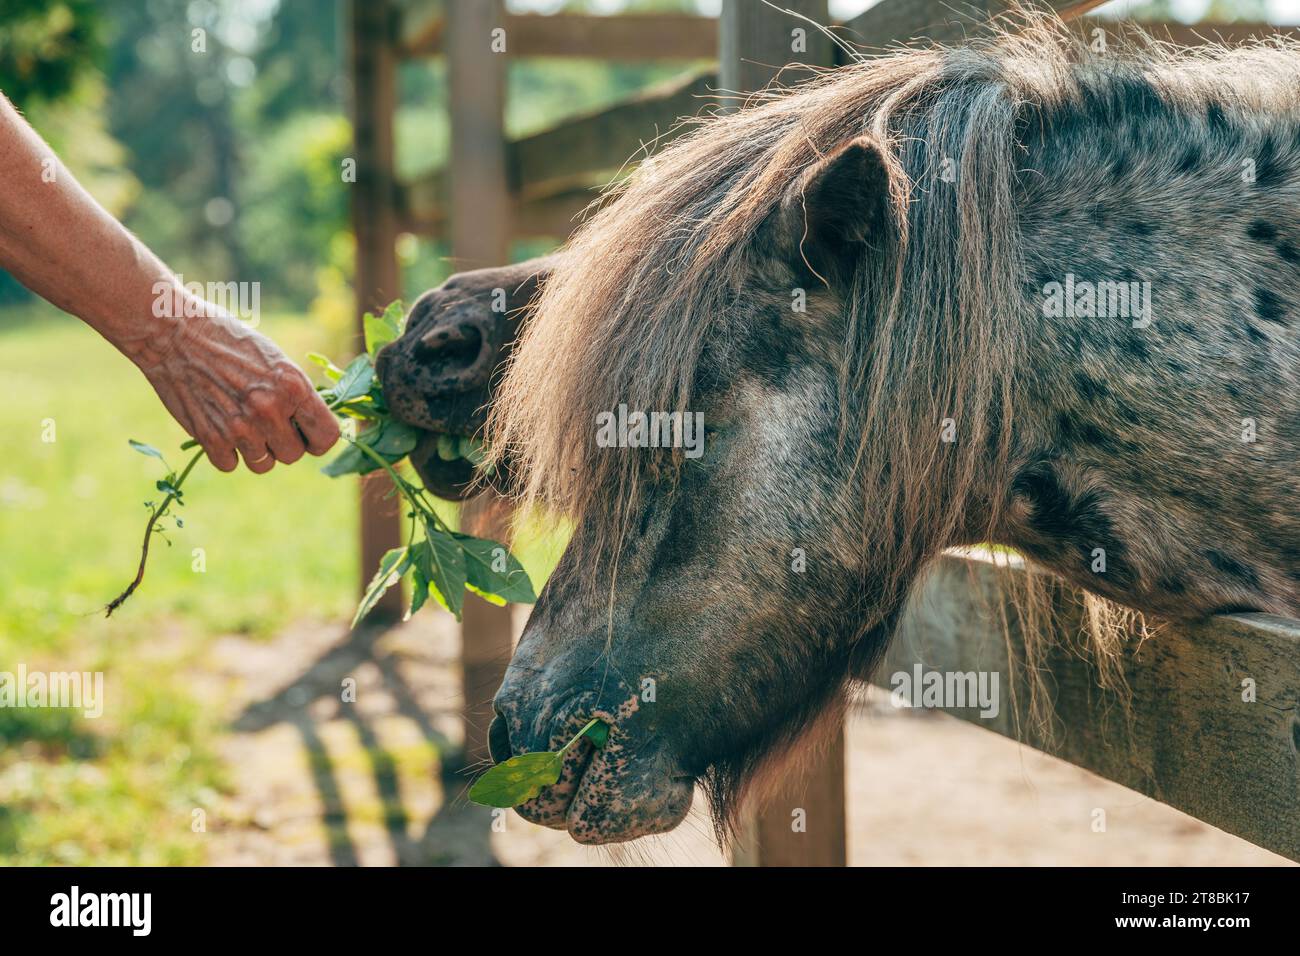 Feeding shetland pony horses at farm barn, close up of female hand feeding animals with lush grass, selective focus Stock Photo